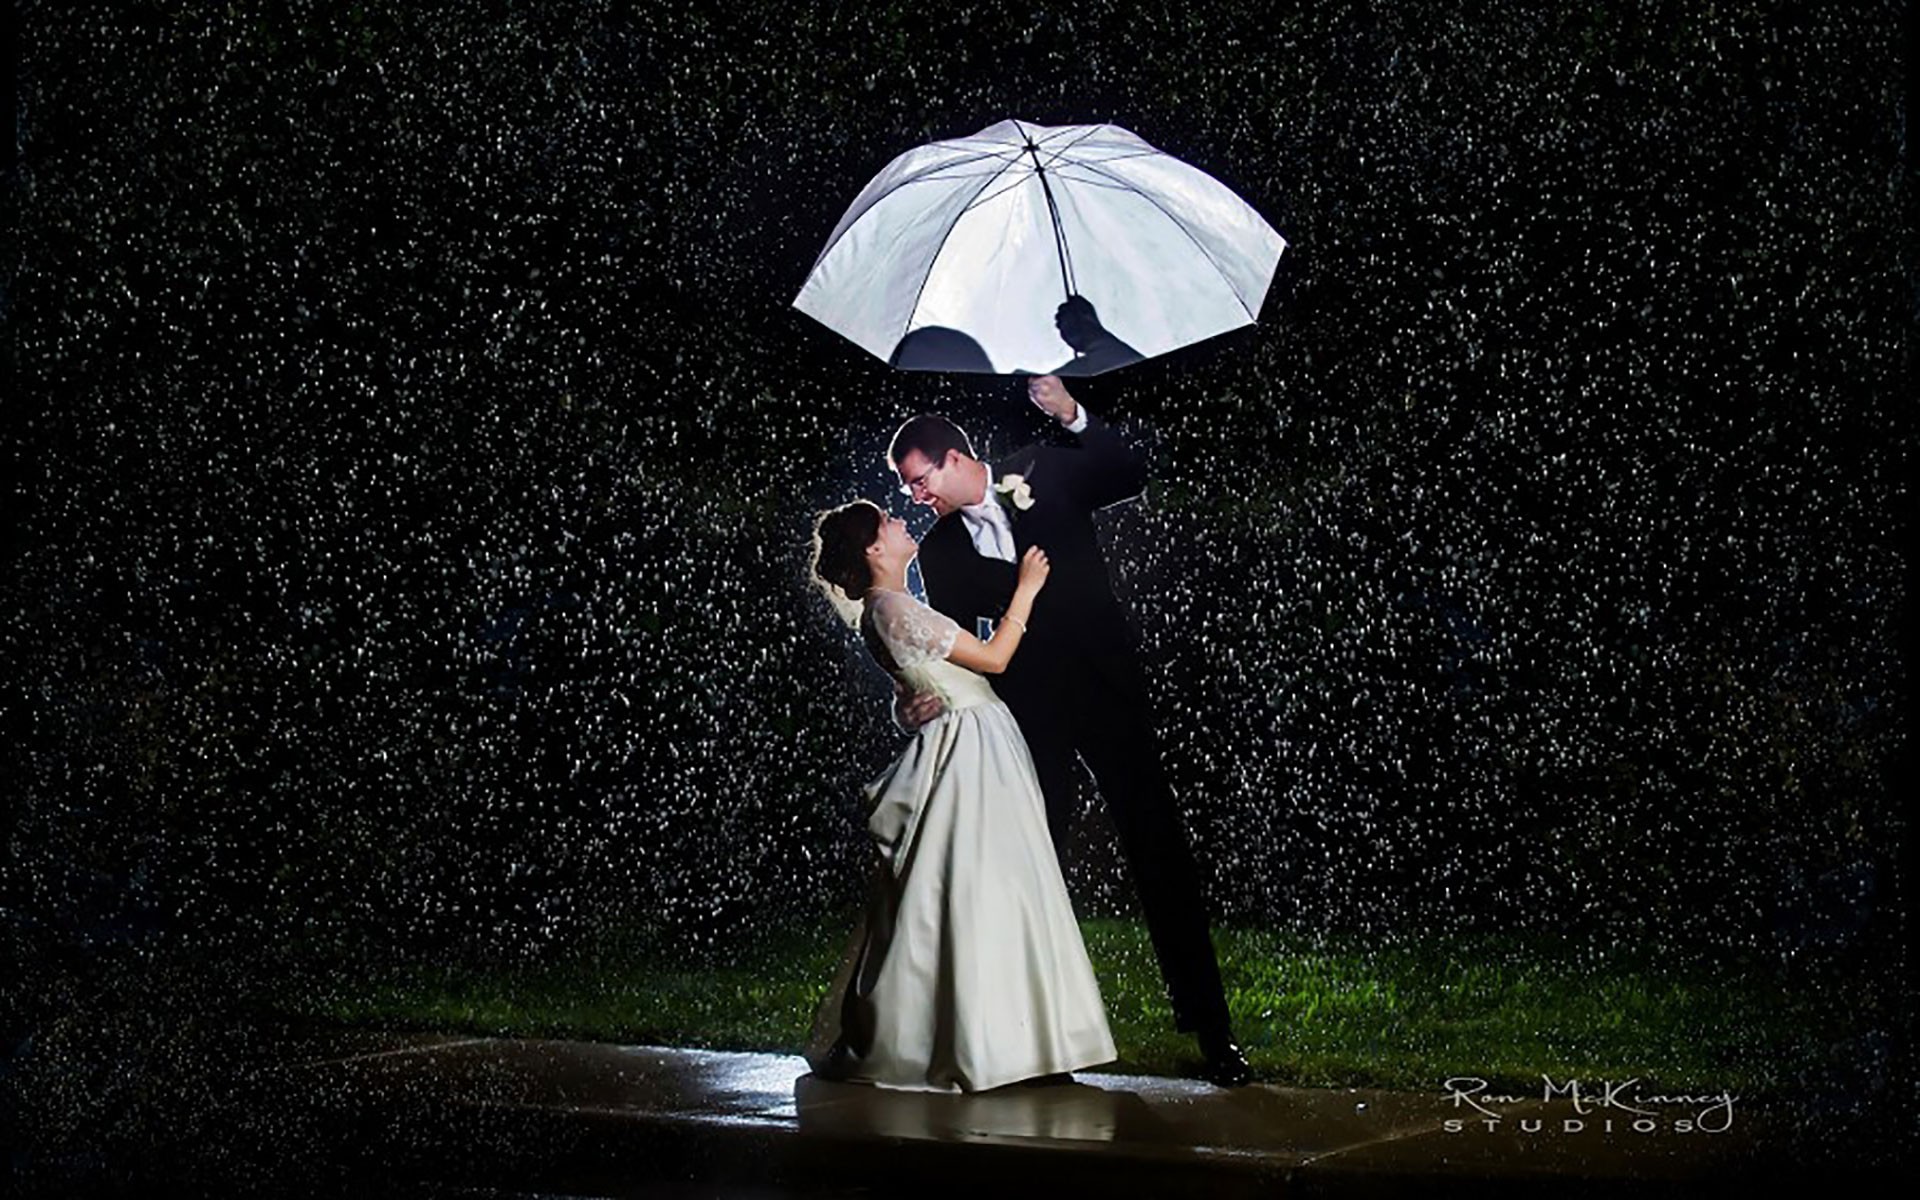 Cute Love Couple Hd Wallpaper - Couples In A Rainy Night - HD Wallpaper 